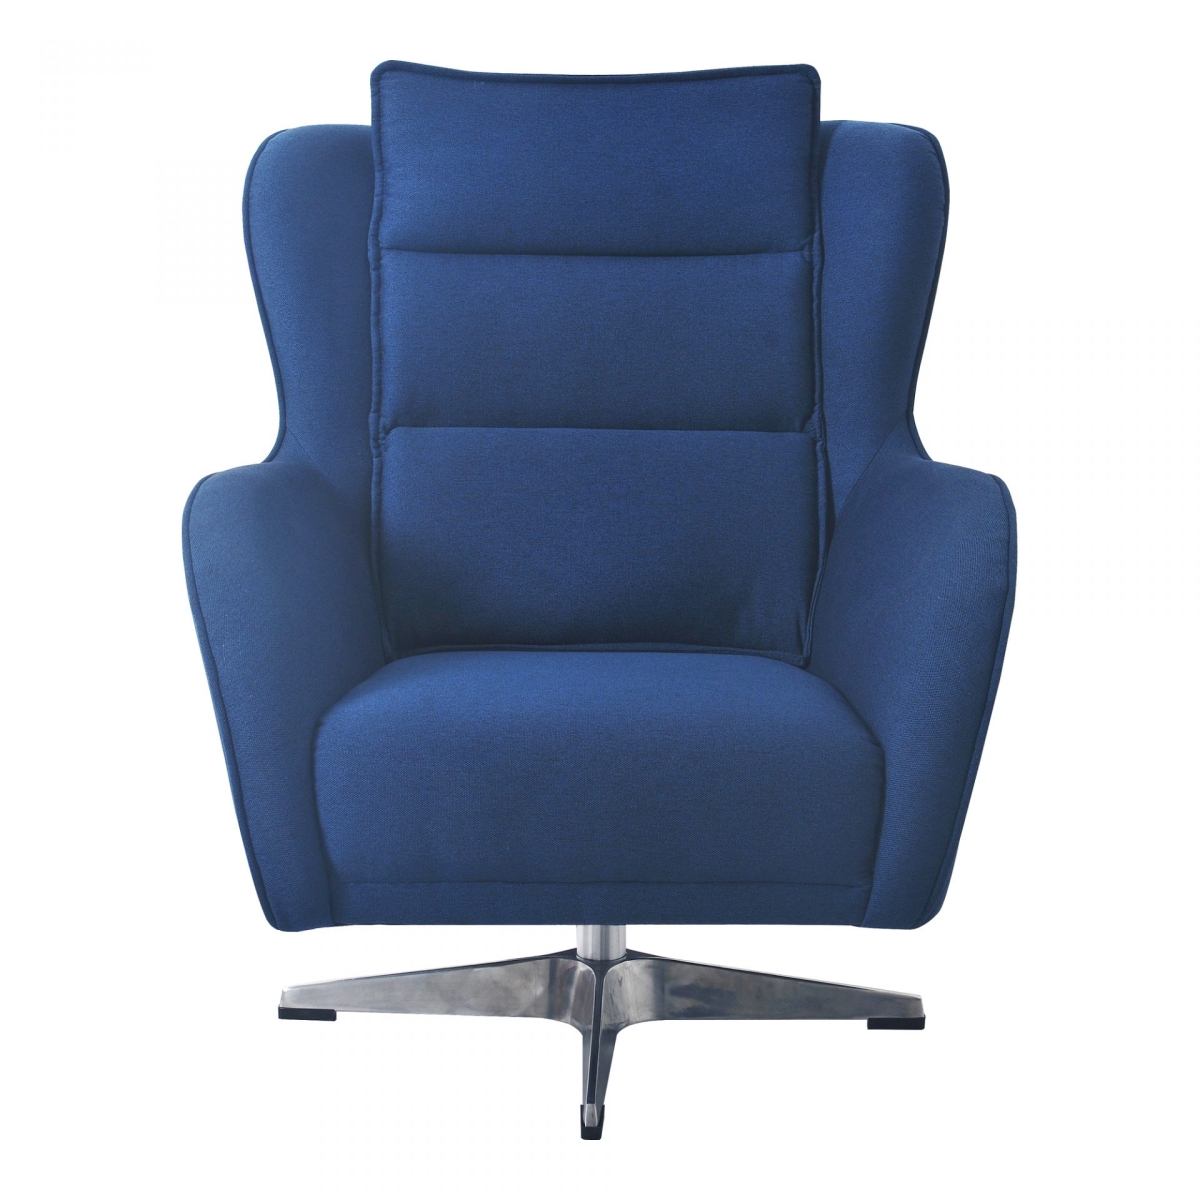 Vv-1004-26 30 X 34 X 35 In. Revolve Swivel Chair, Blue